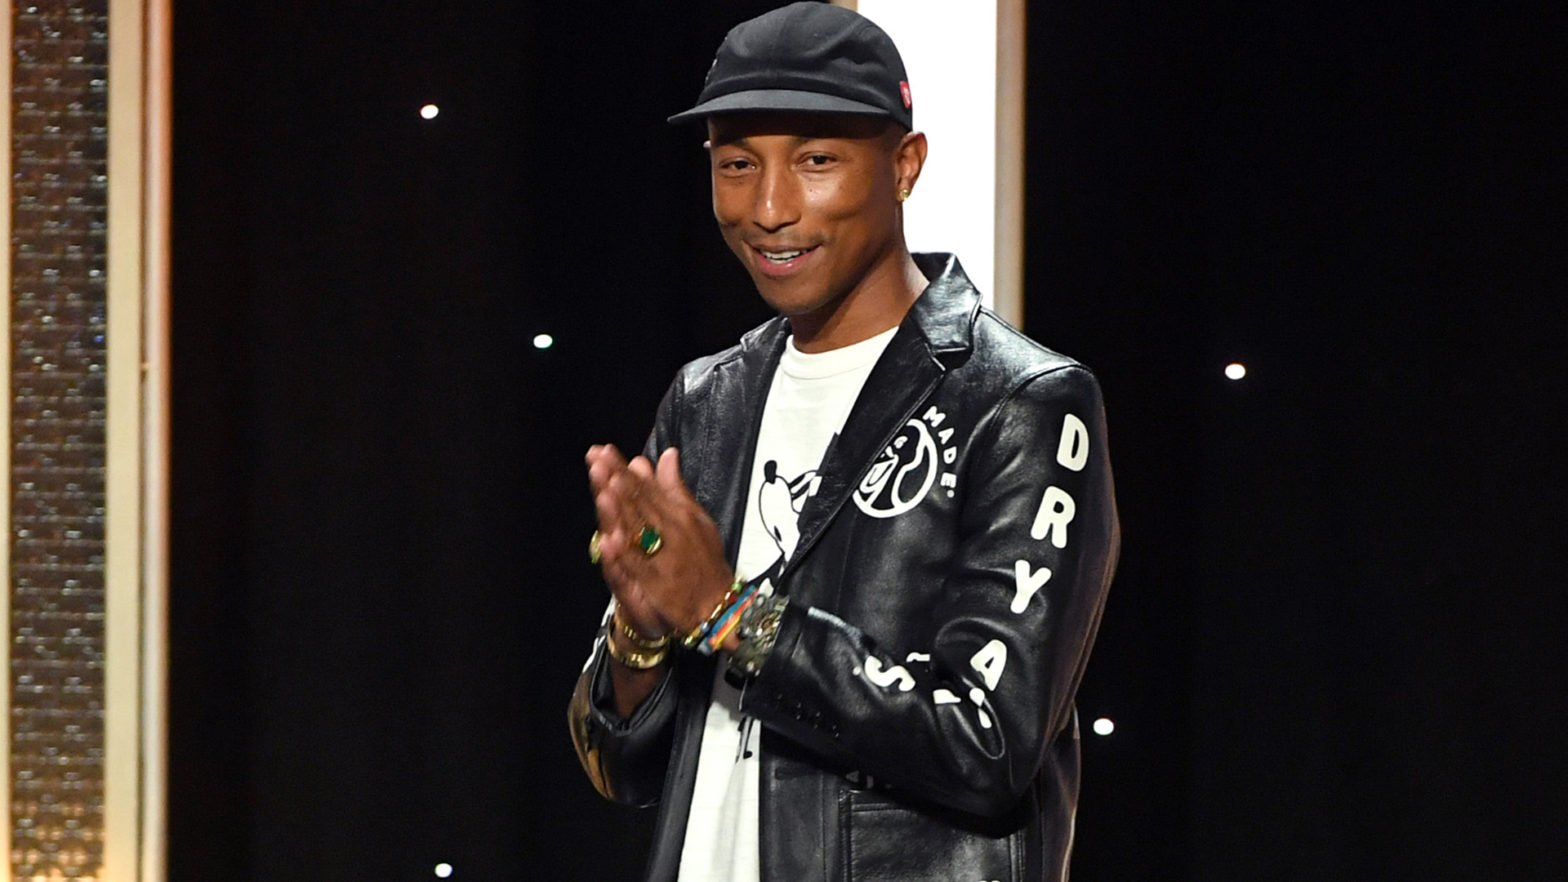 Black Ambition: How Producer-Turned-Entrepreneur Pharrell Williams Built A $200M Net Worth